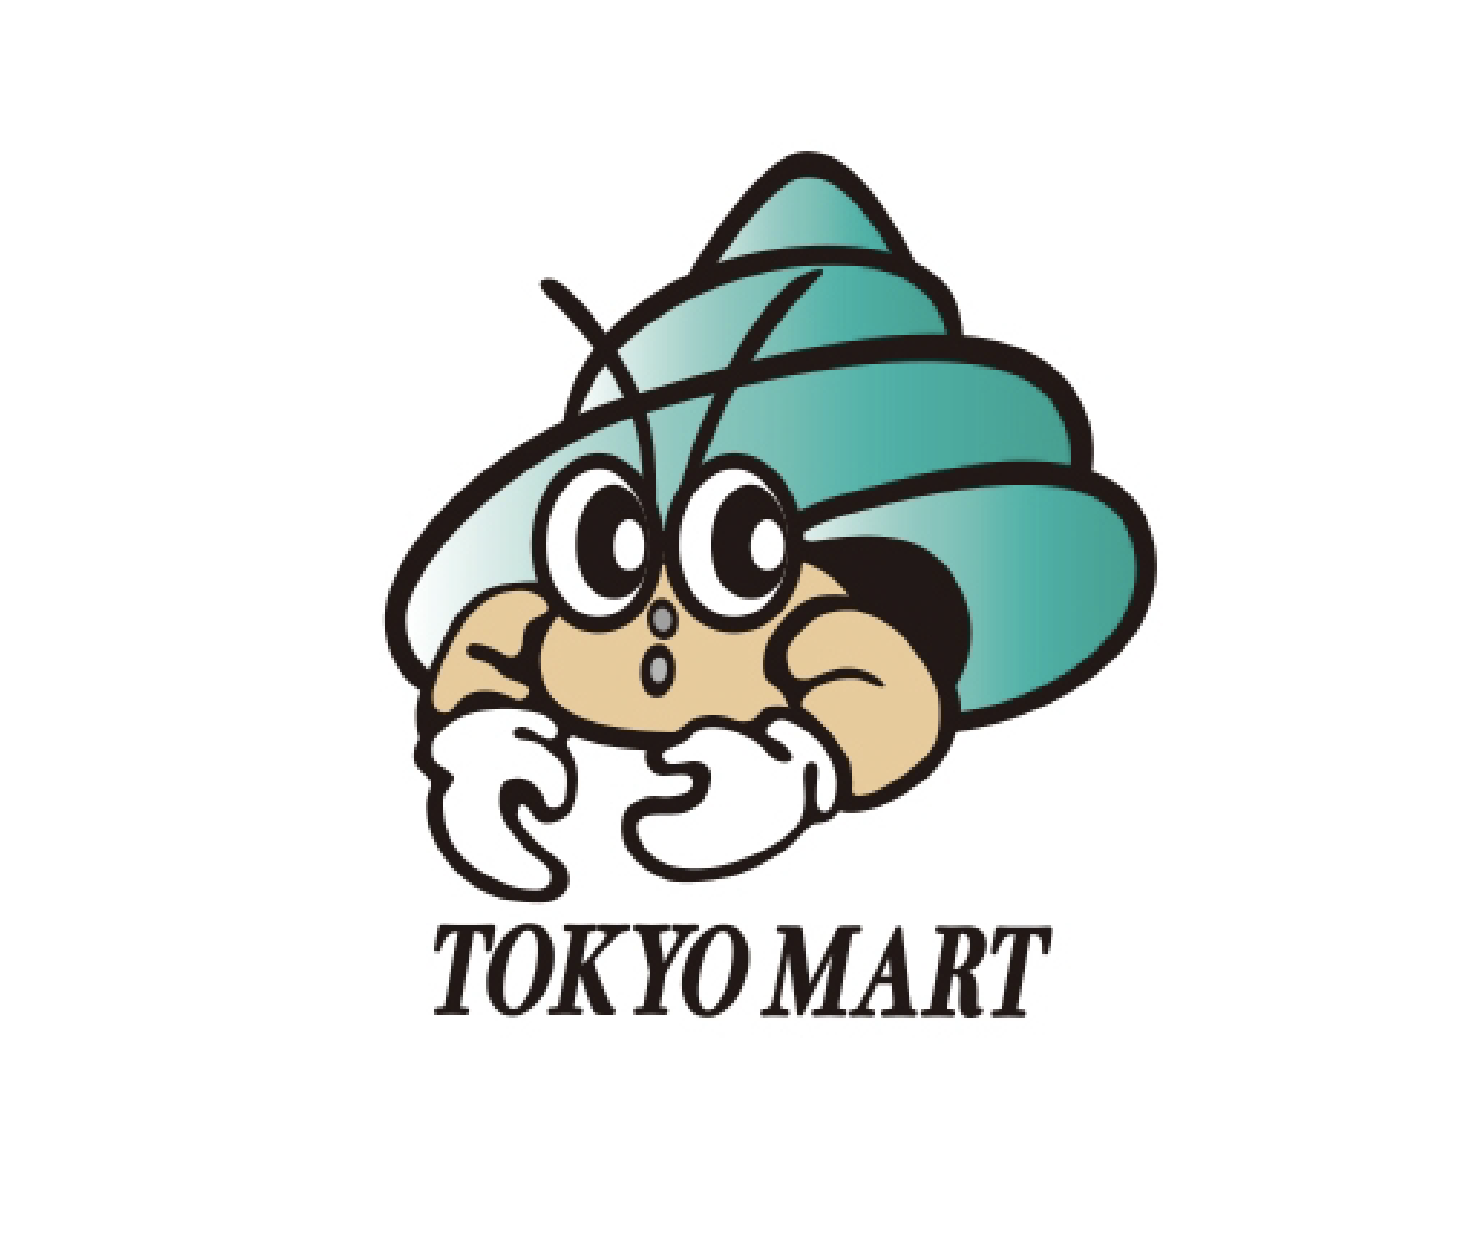 Tokyo Mart